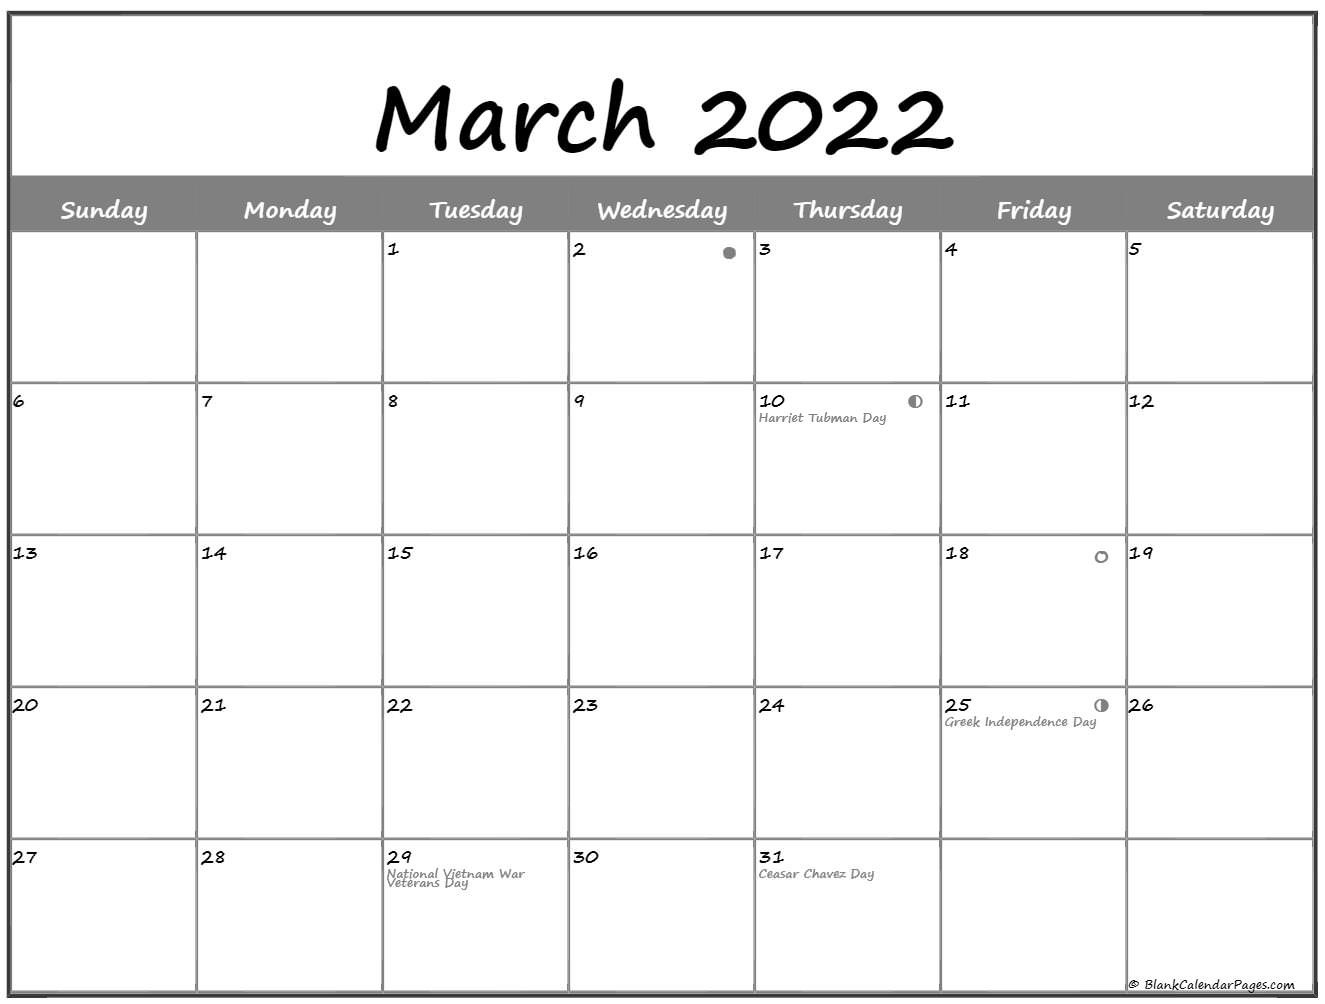 March 2022 Lunar Calendar | Moon Phase Calendar  January Feb March April 2022 Calendar